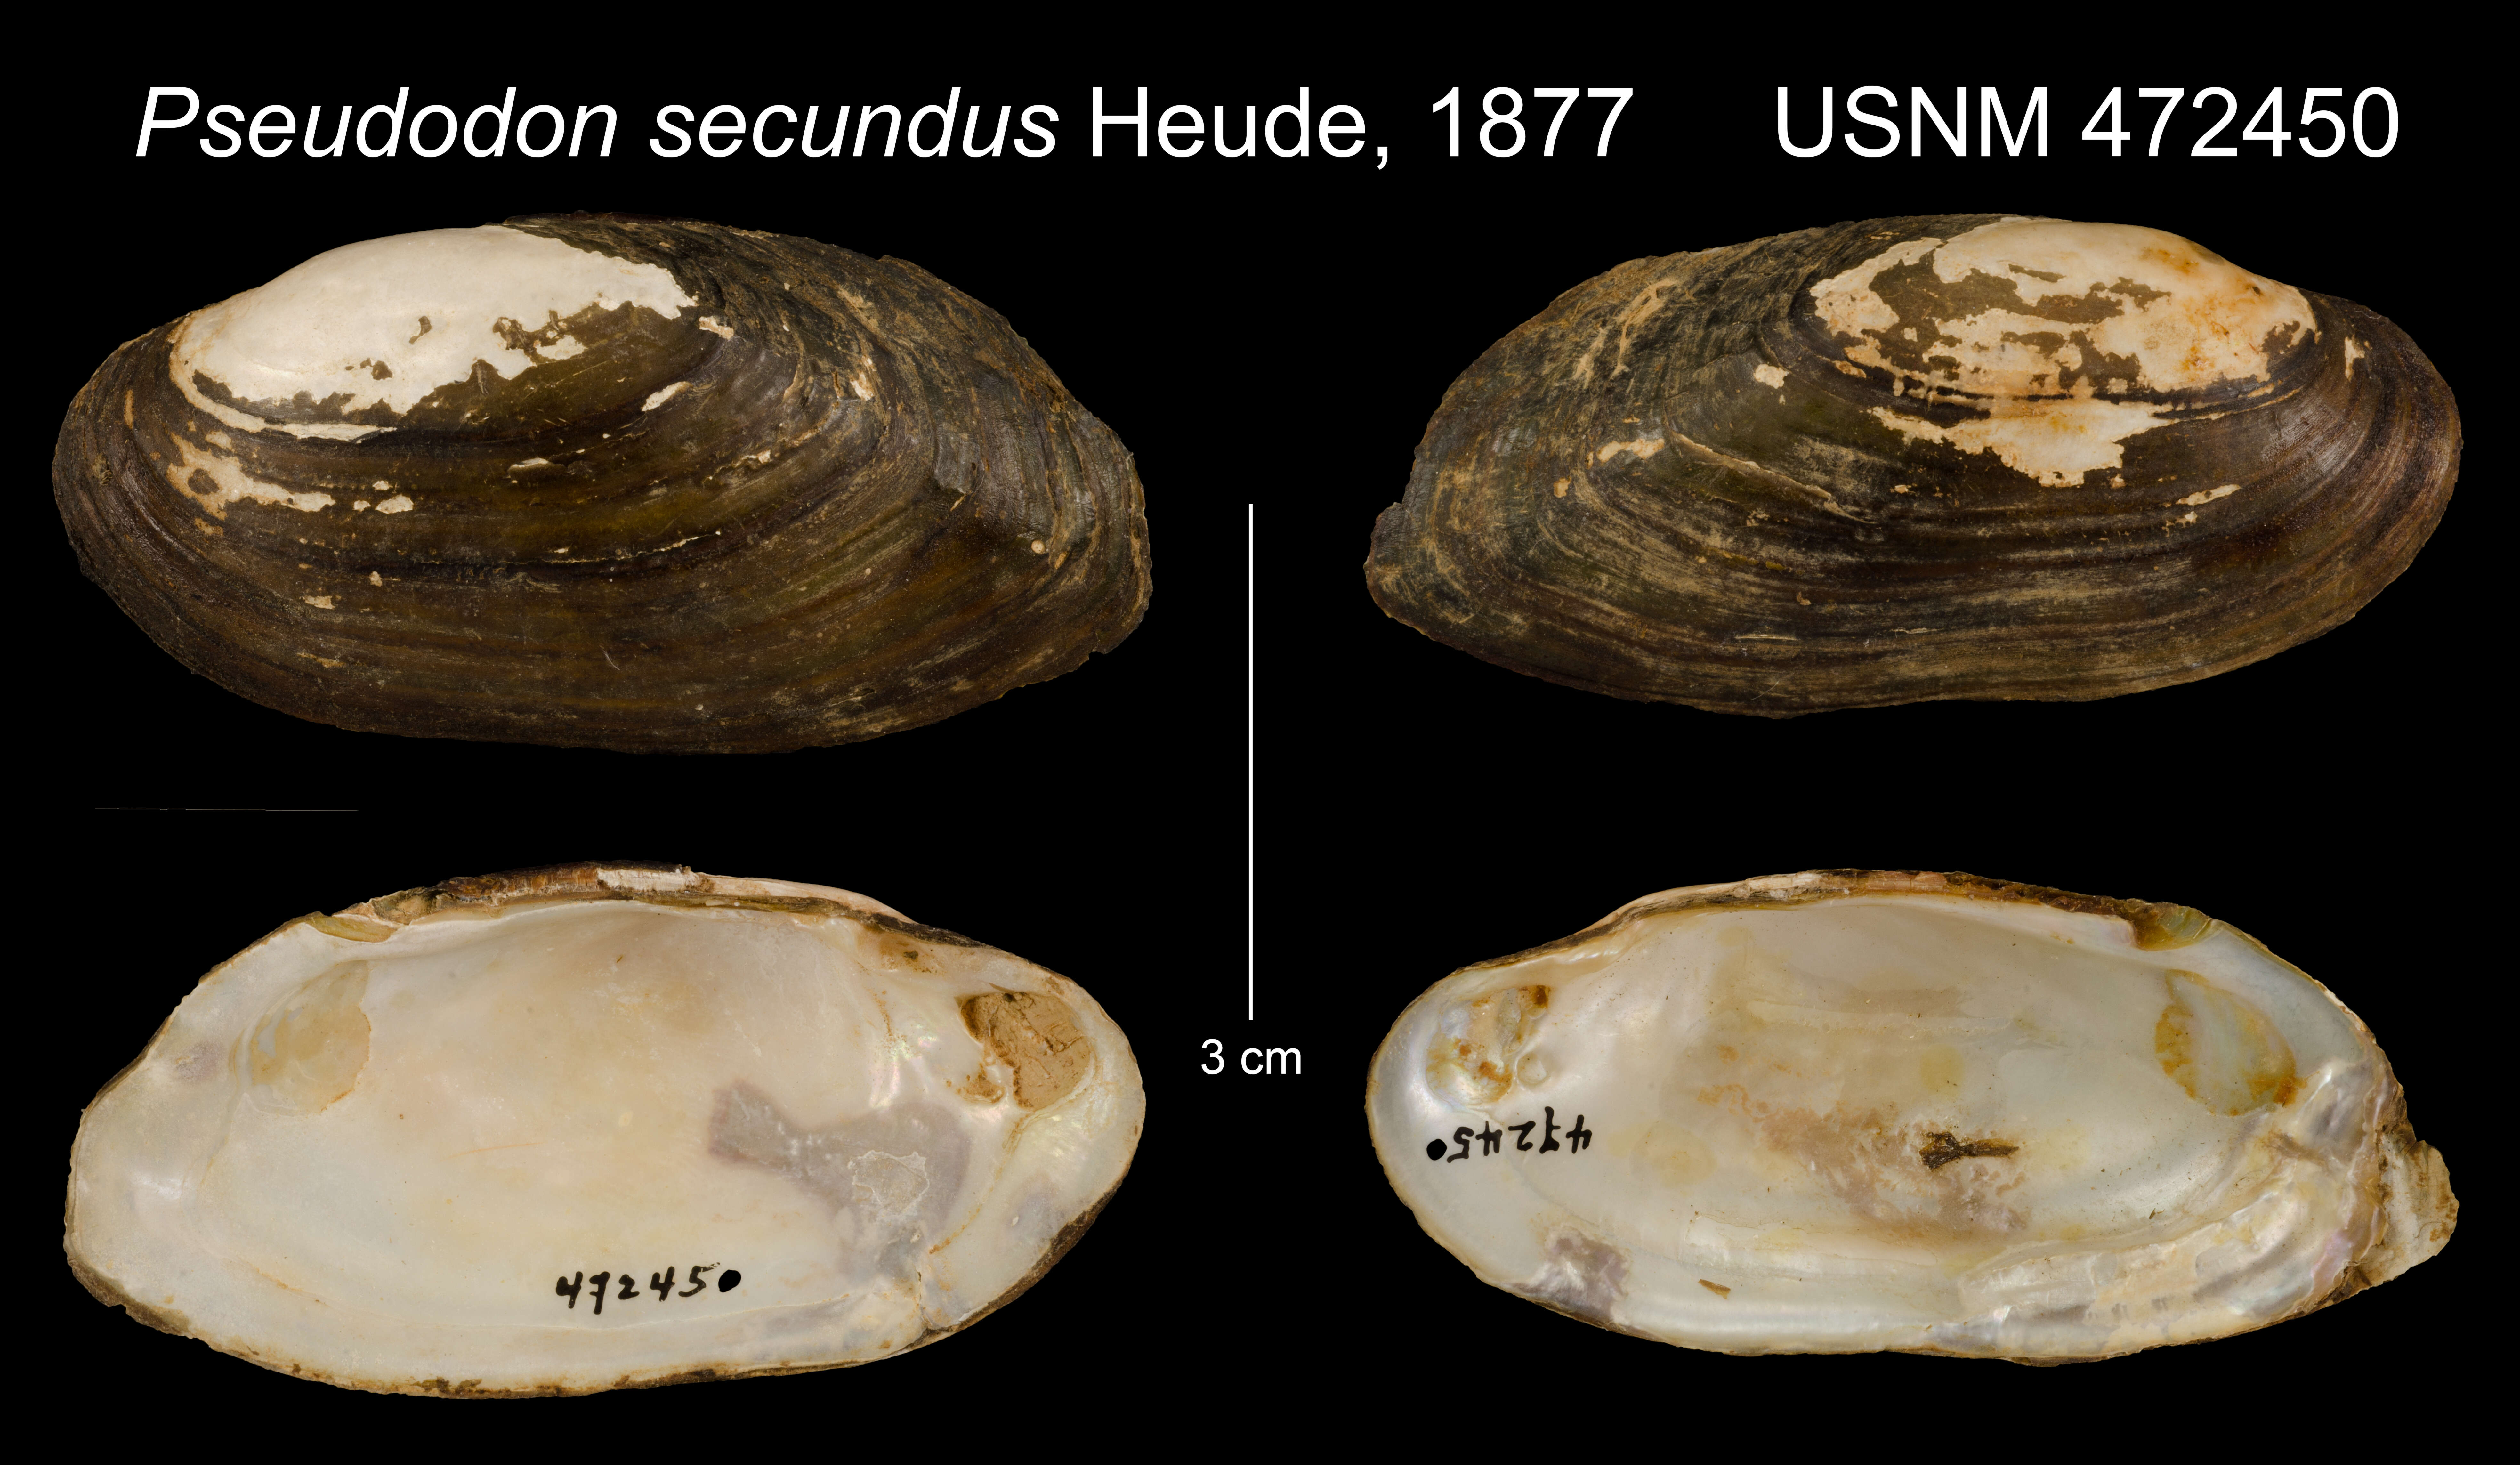 Image of Pseudodon secundus Heude 1877